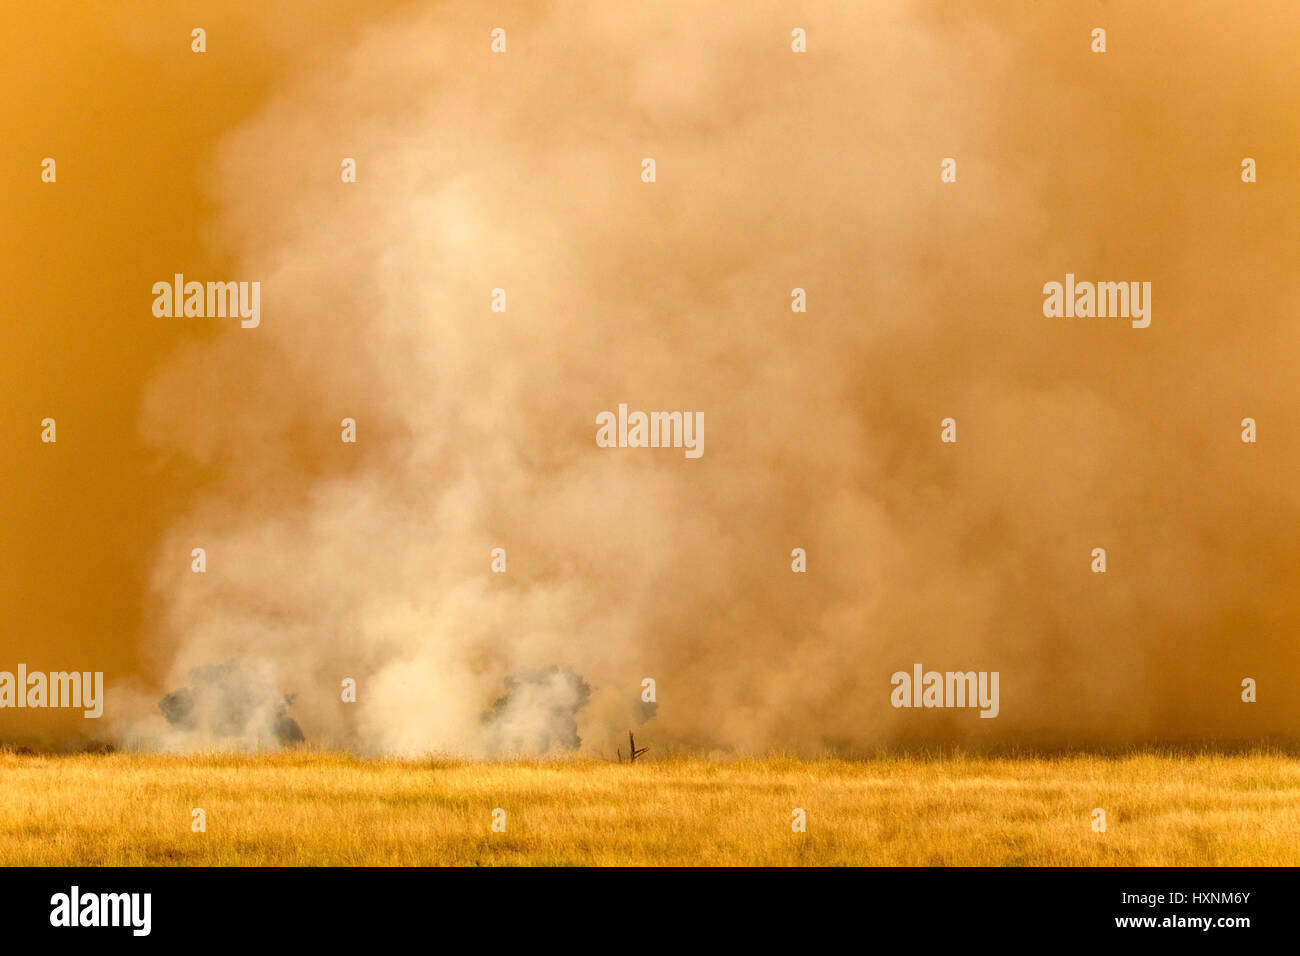 GNU Herde vor Sand Sturm - Kenia, Gnuherde Vor Sandsturm - Kenia Stockfoto